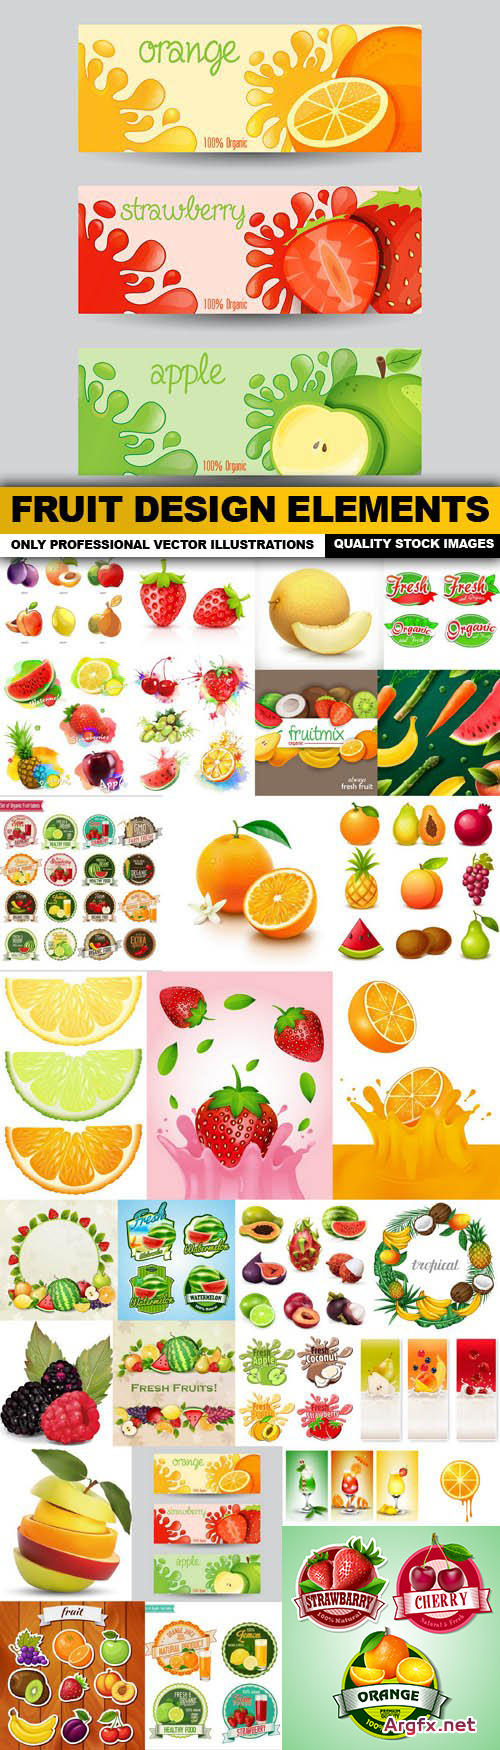 Fruit Design Elements - 30 Vector